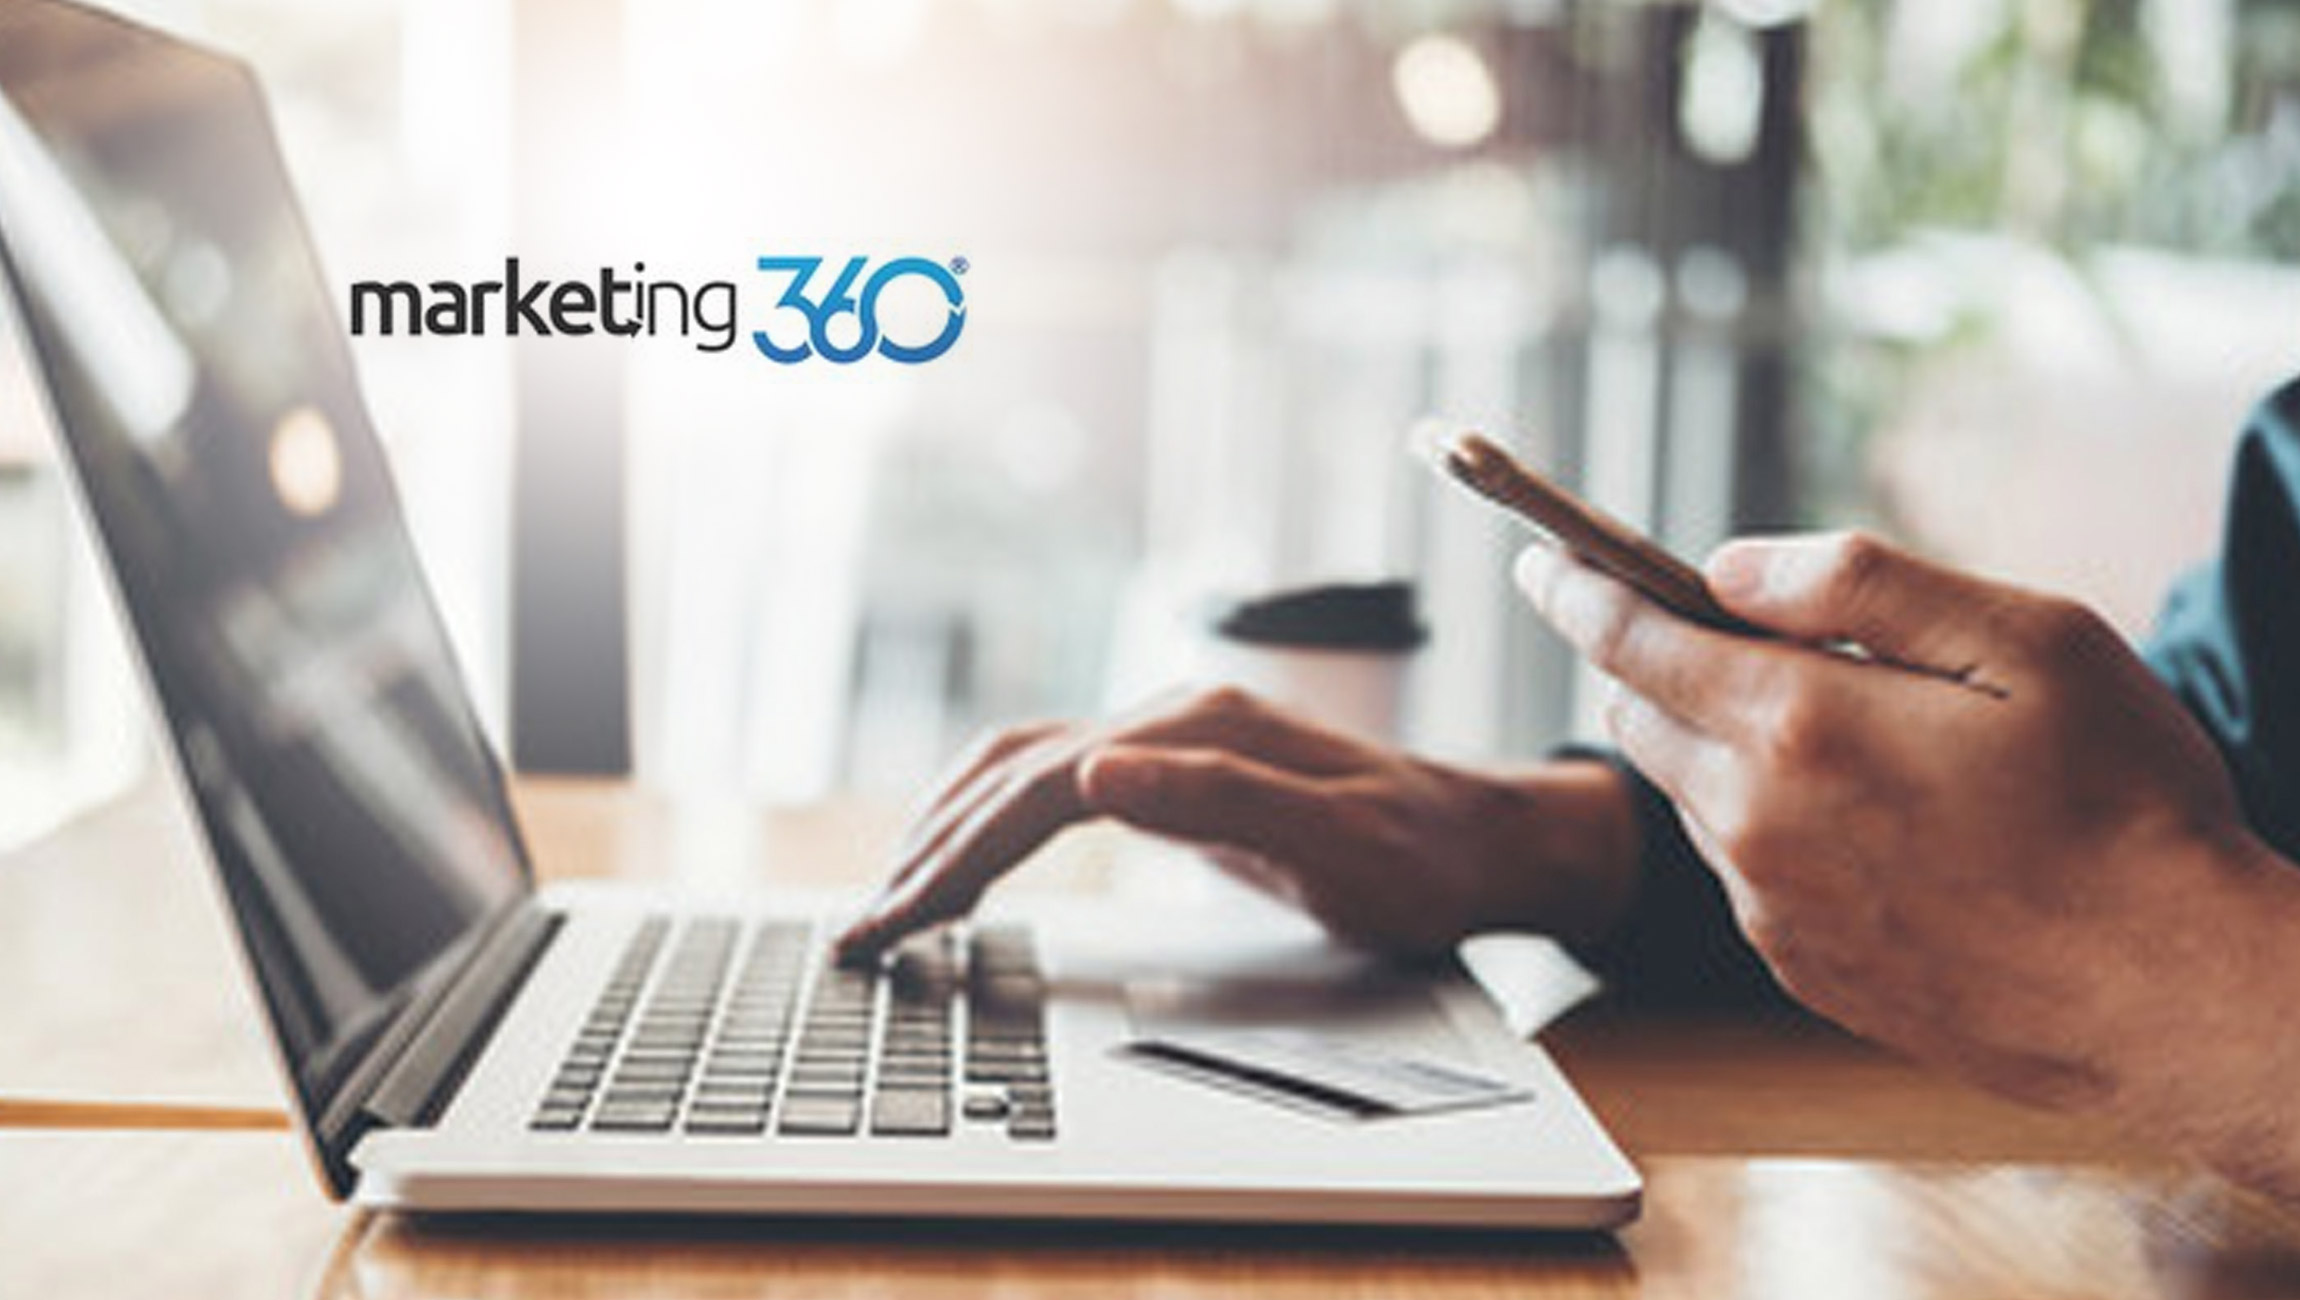 Marketing 360 Long-Term Content Marketing Strategy Yields Success